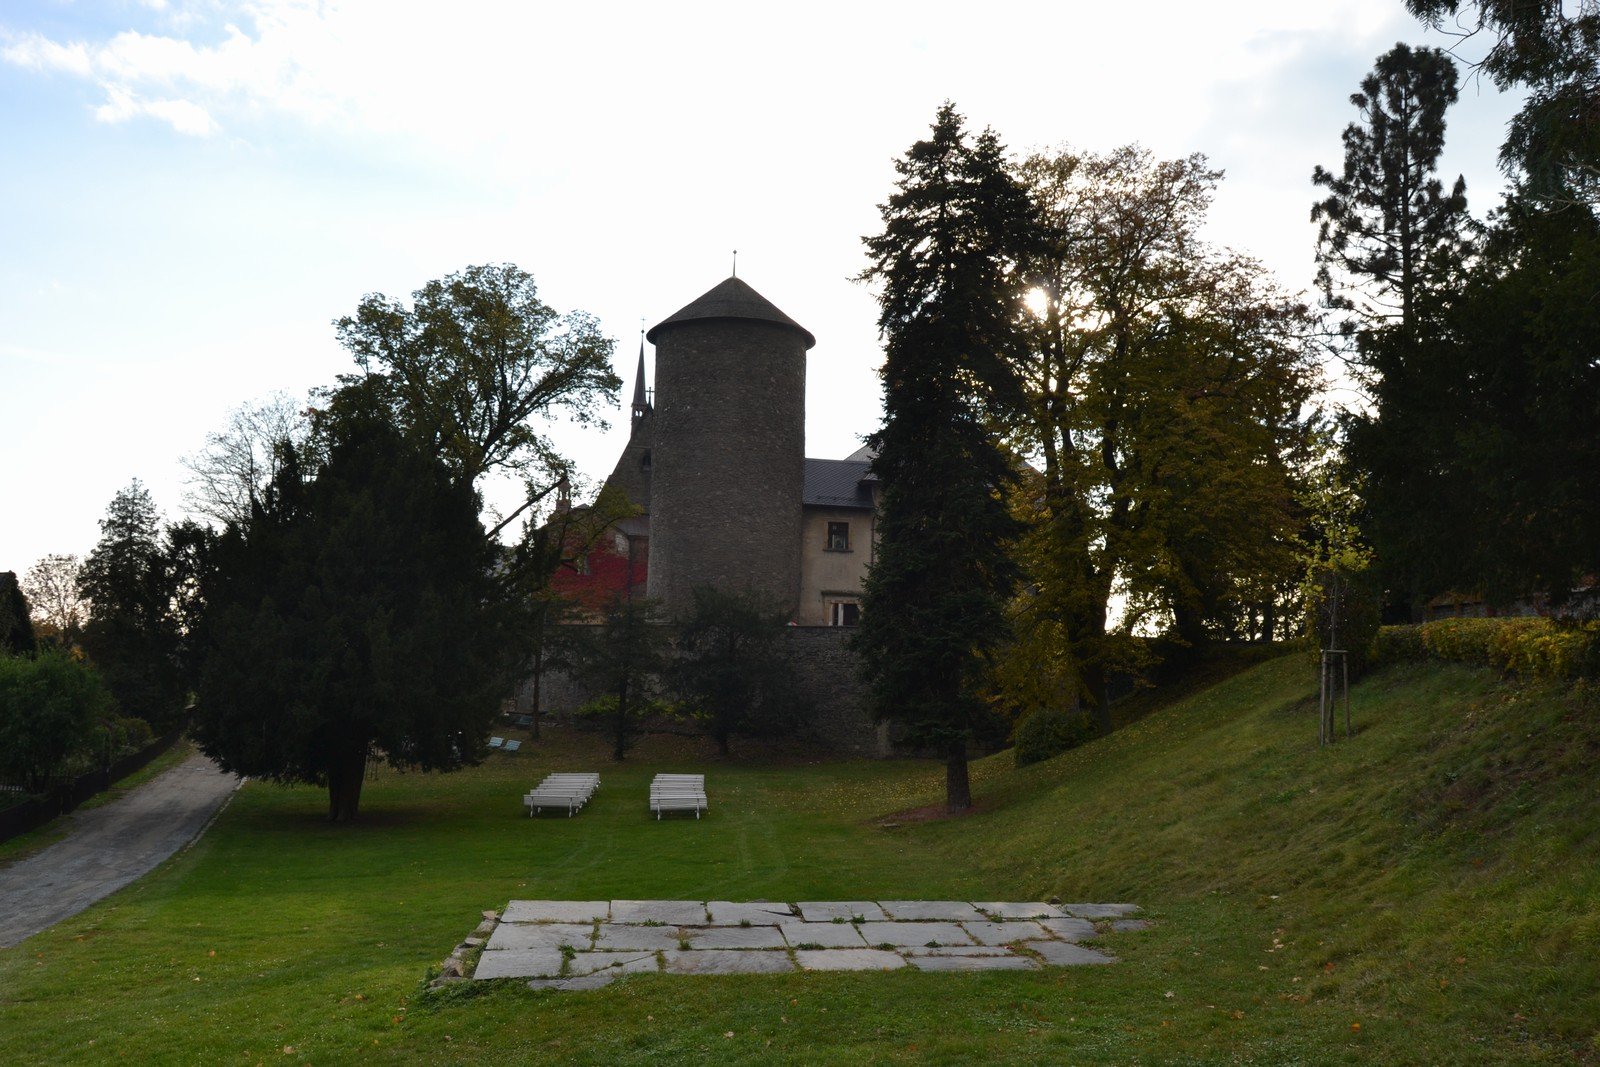 Castelul Šternberk